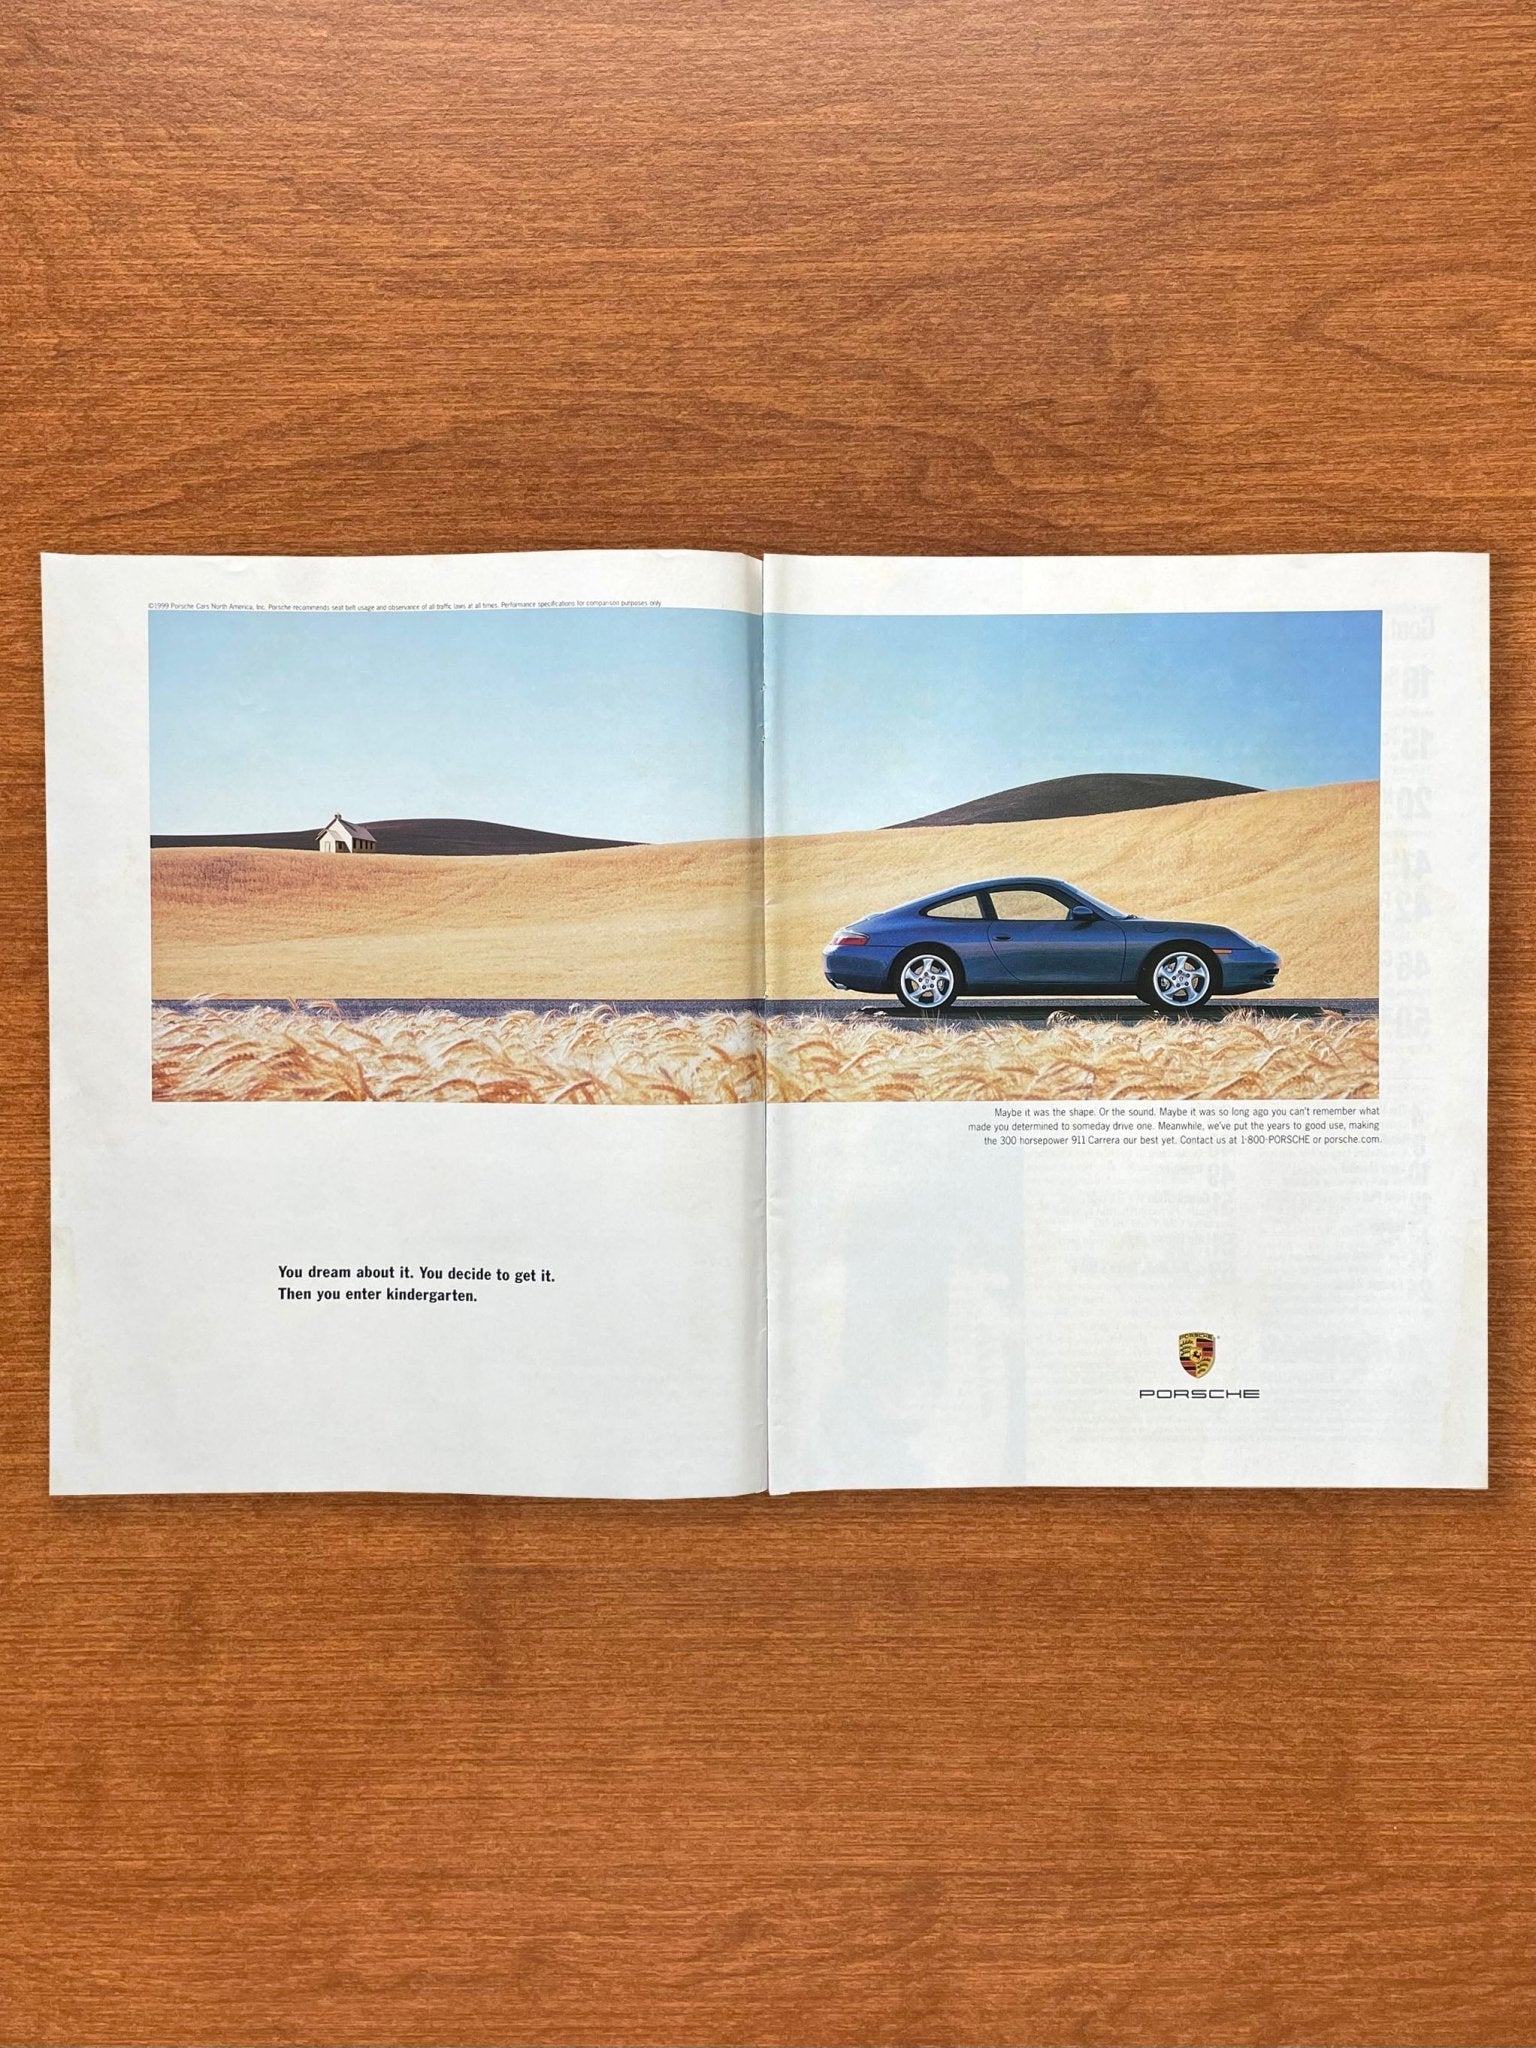 2000 Porsche 911 Carrera "Then you enter Kindergarten." Advertisement